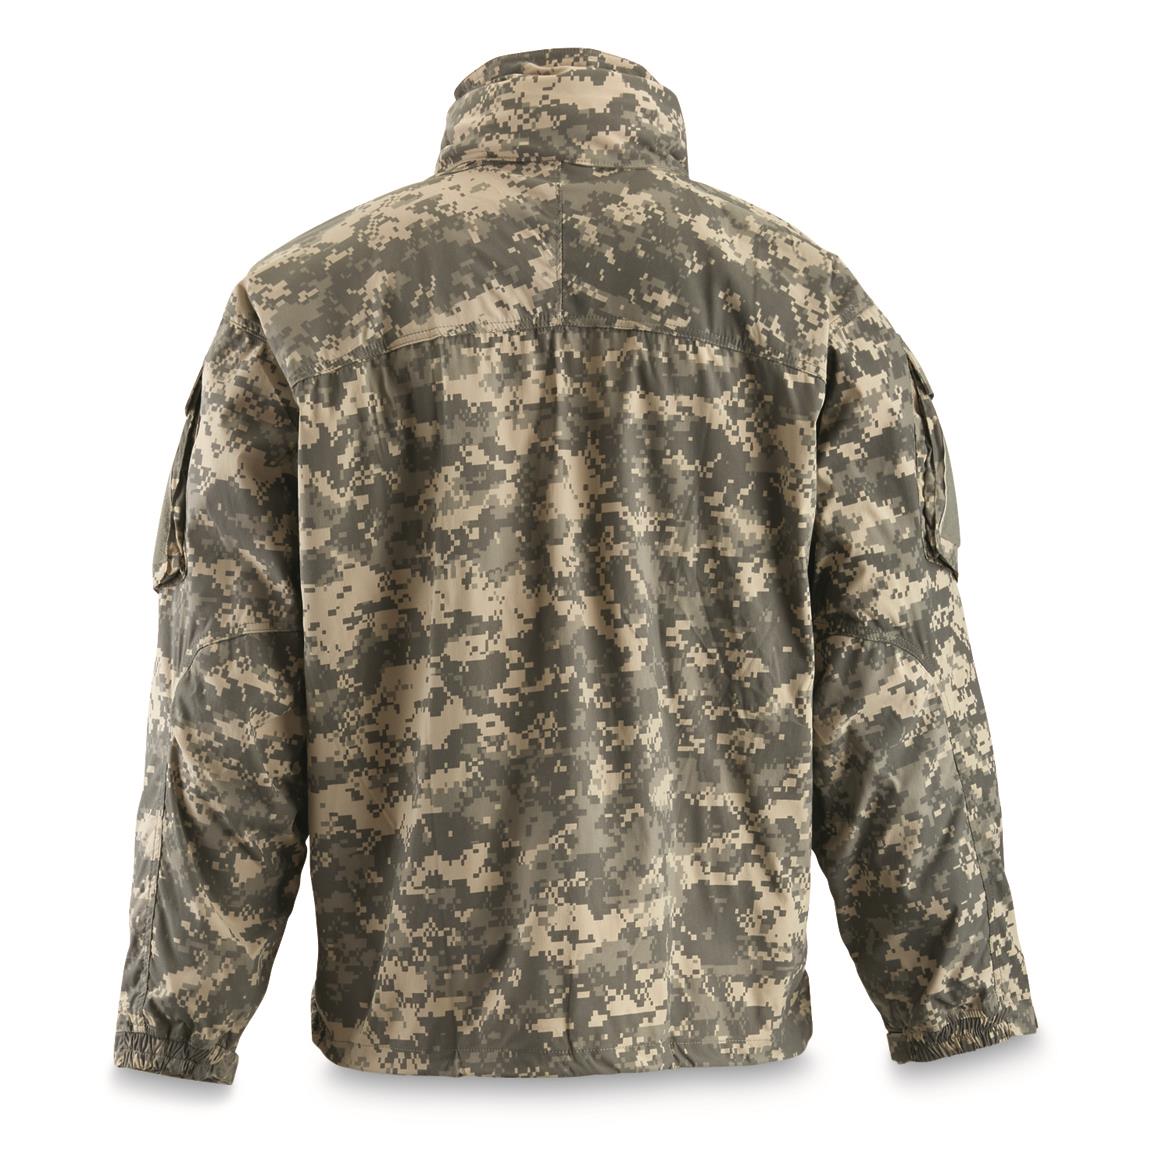 Usa Military Surplus Jacket | Sportsman's Guide